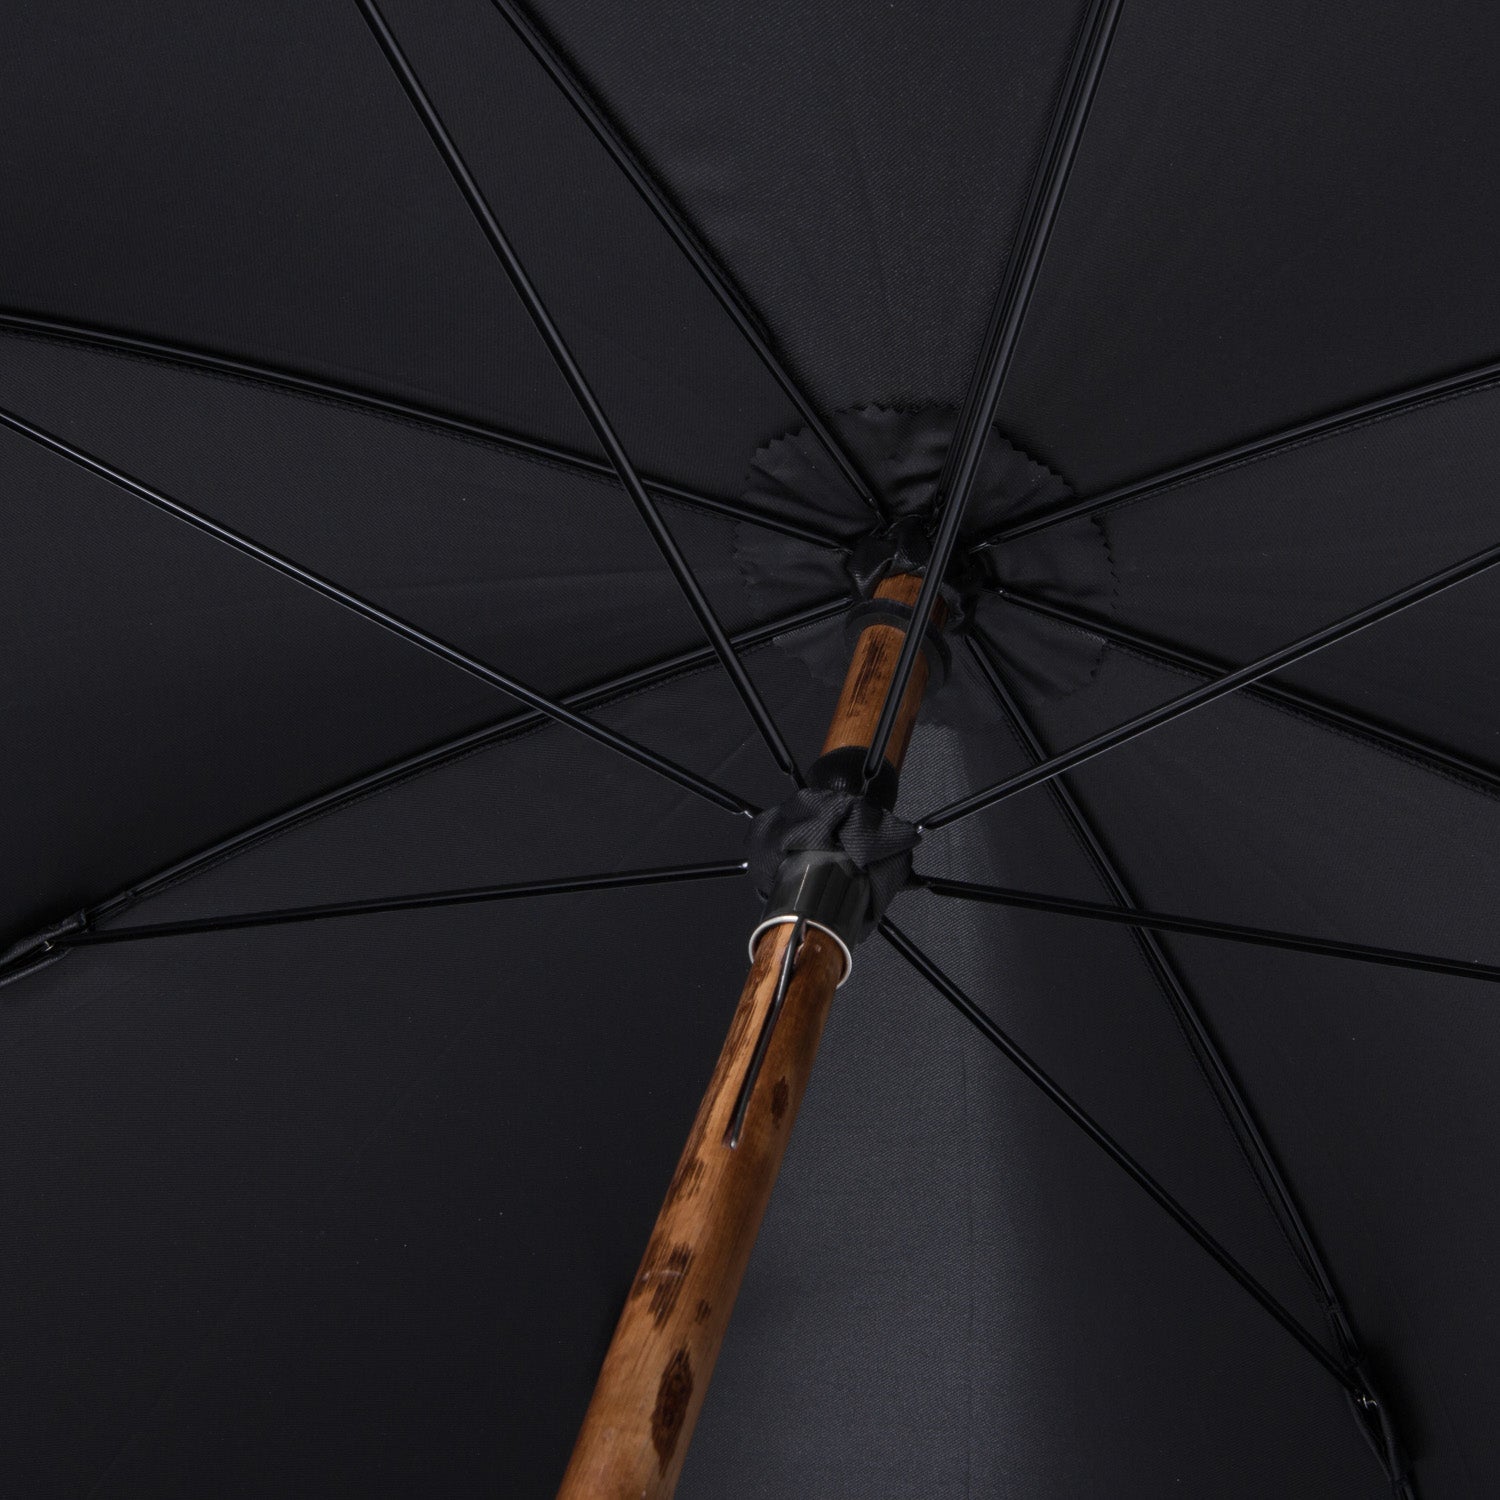 A Walnut Solid-Stick Umbrella with Black Canopy from KirbyAllison.com.